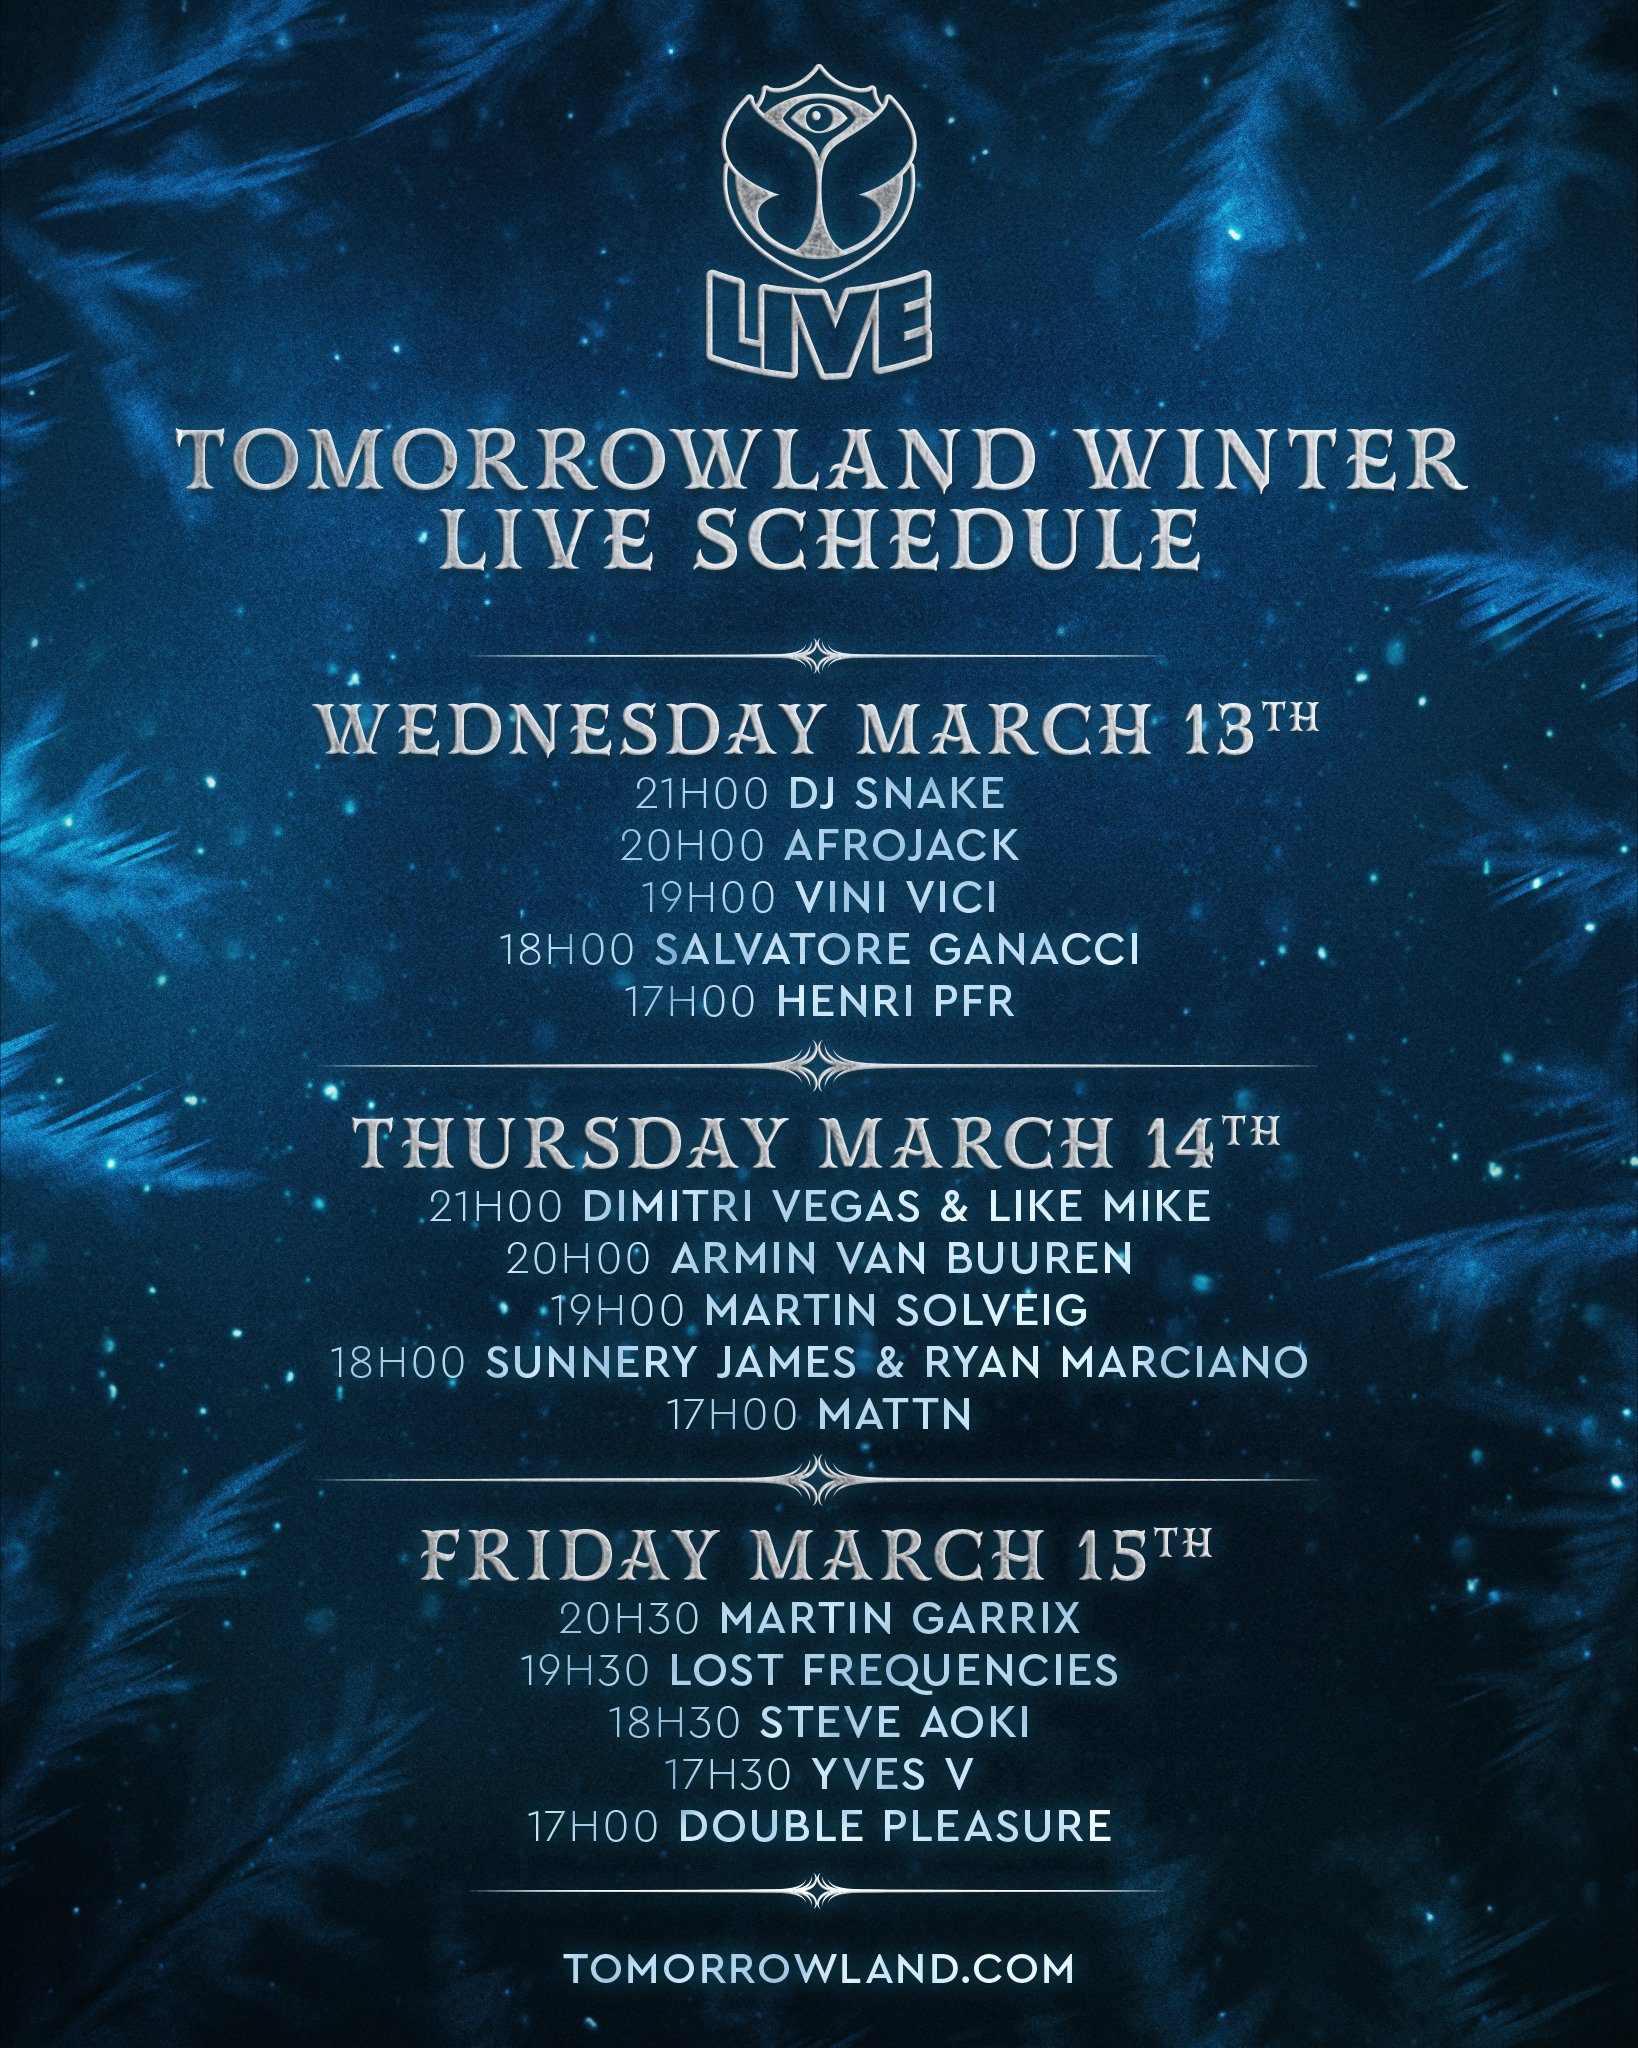 Tomorrowland Winter 2019 Live Schedule